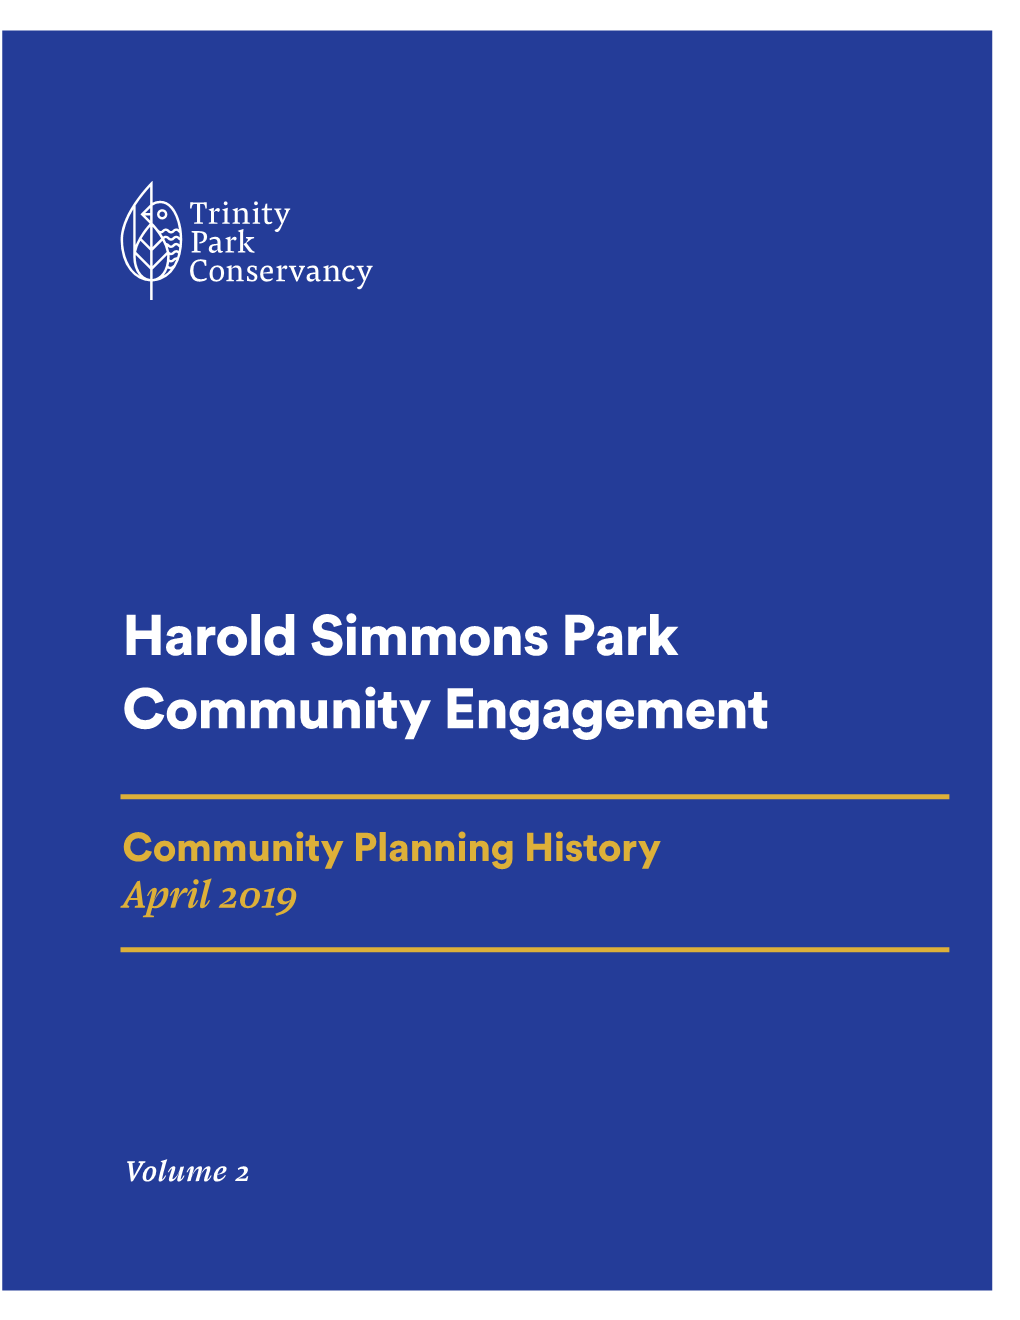 Harold Simmons Park Community Engagement